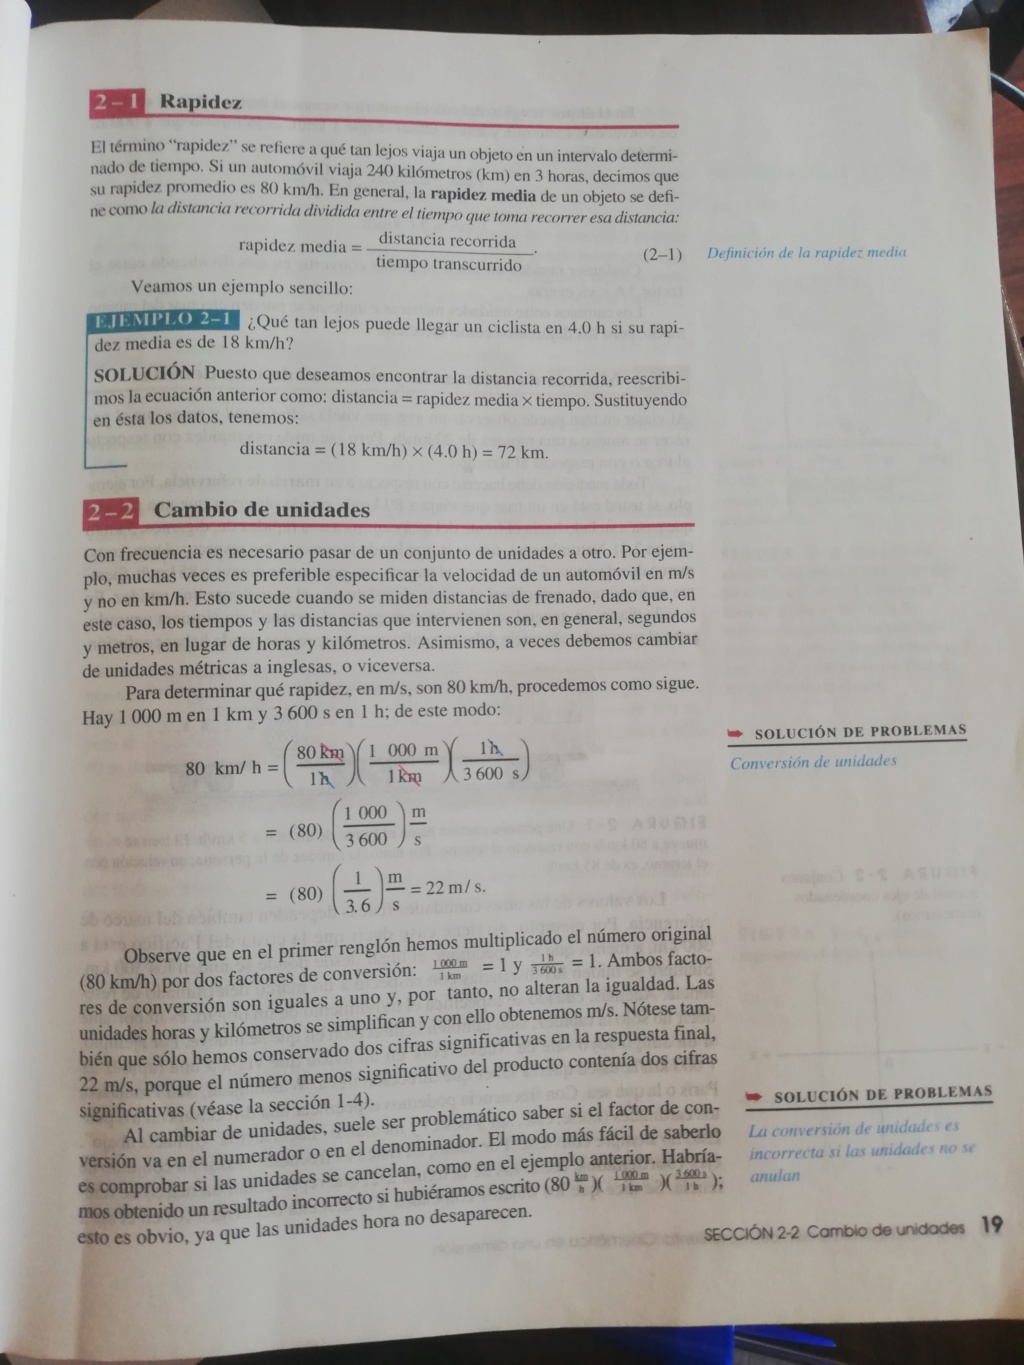        Física - Página 6 Img_2014